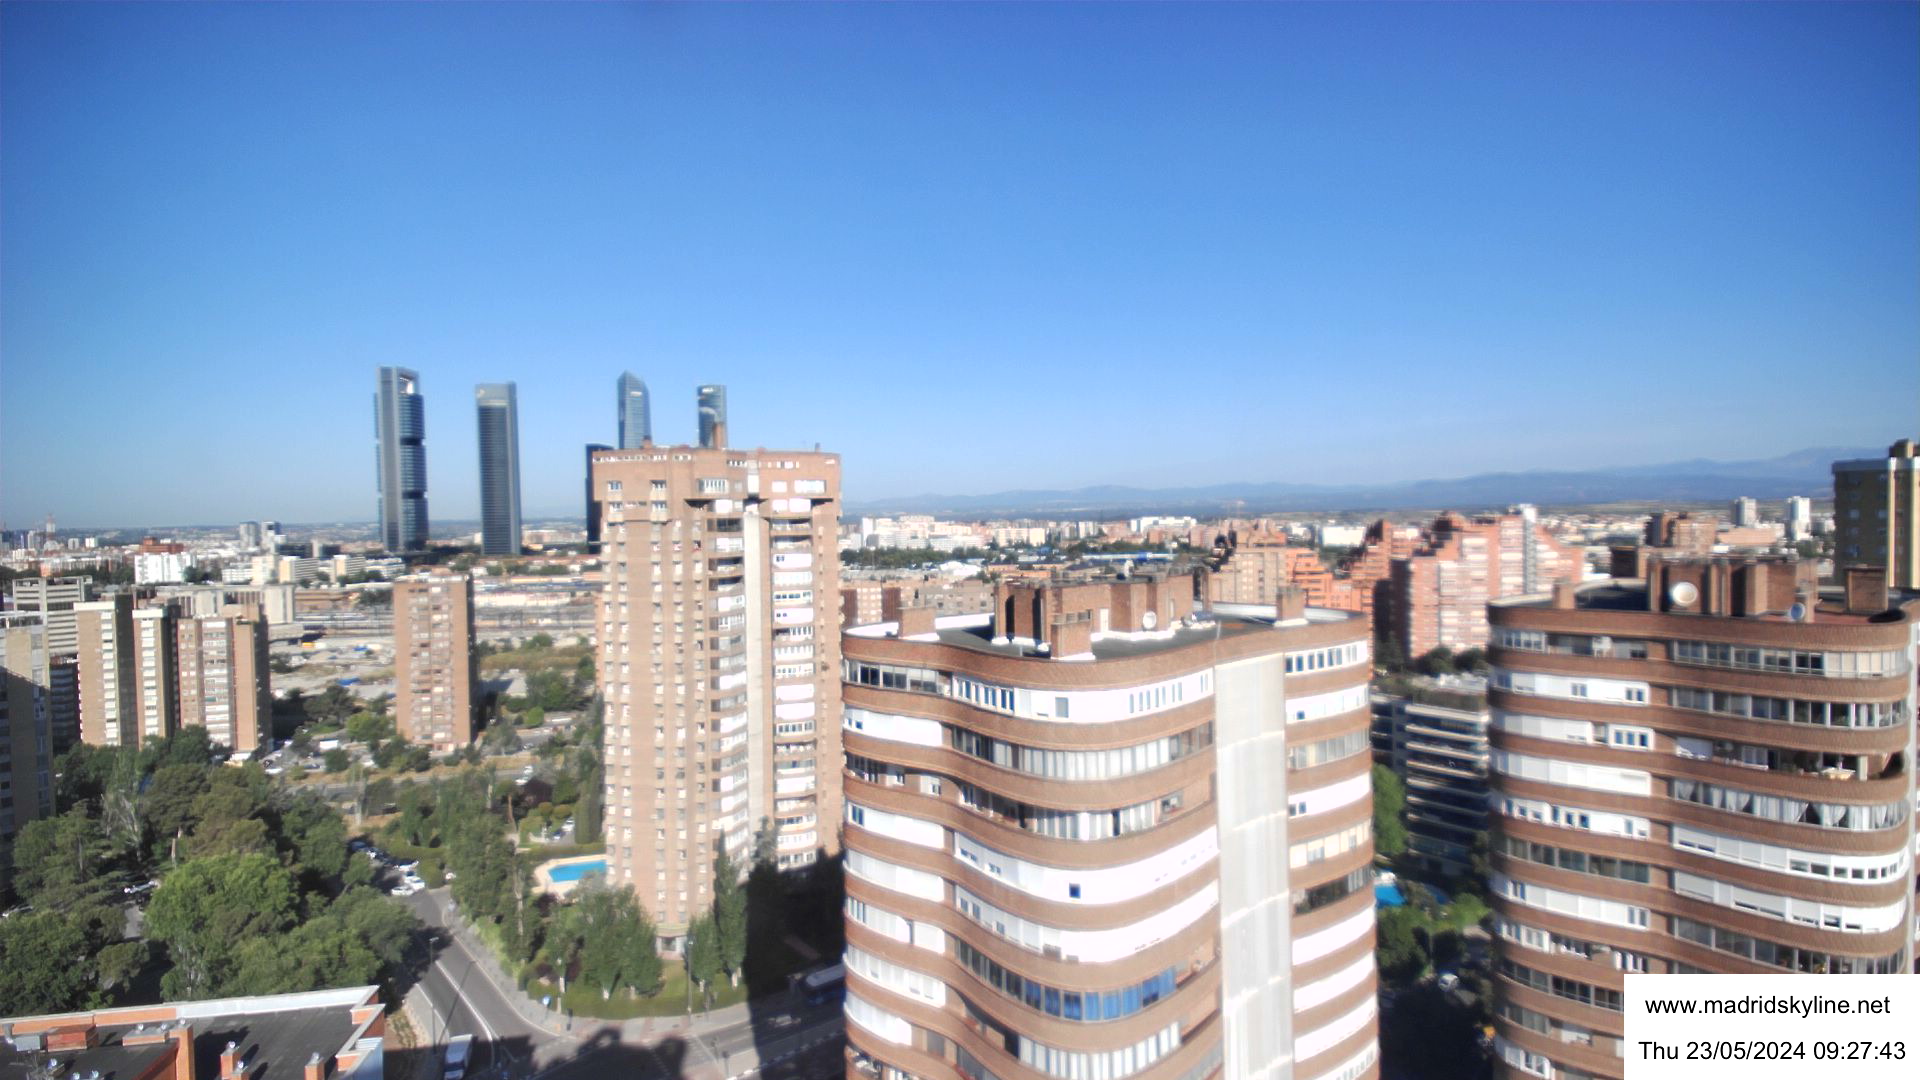 Madrid Skyline High Definition Webcam